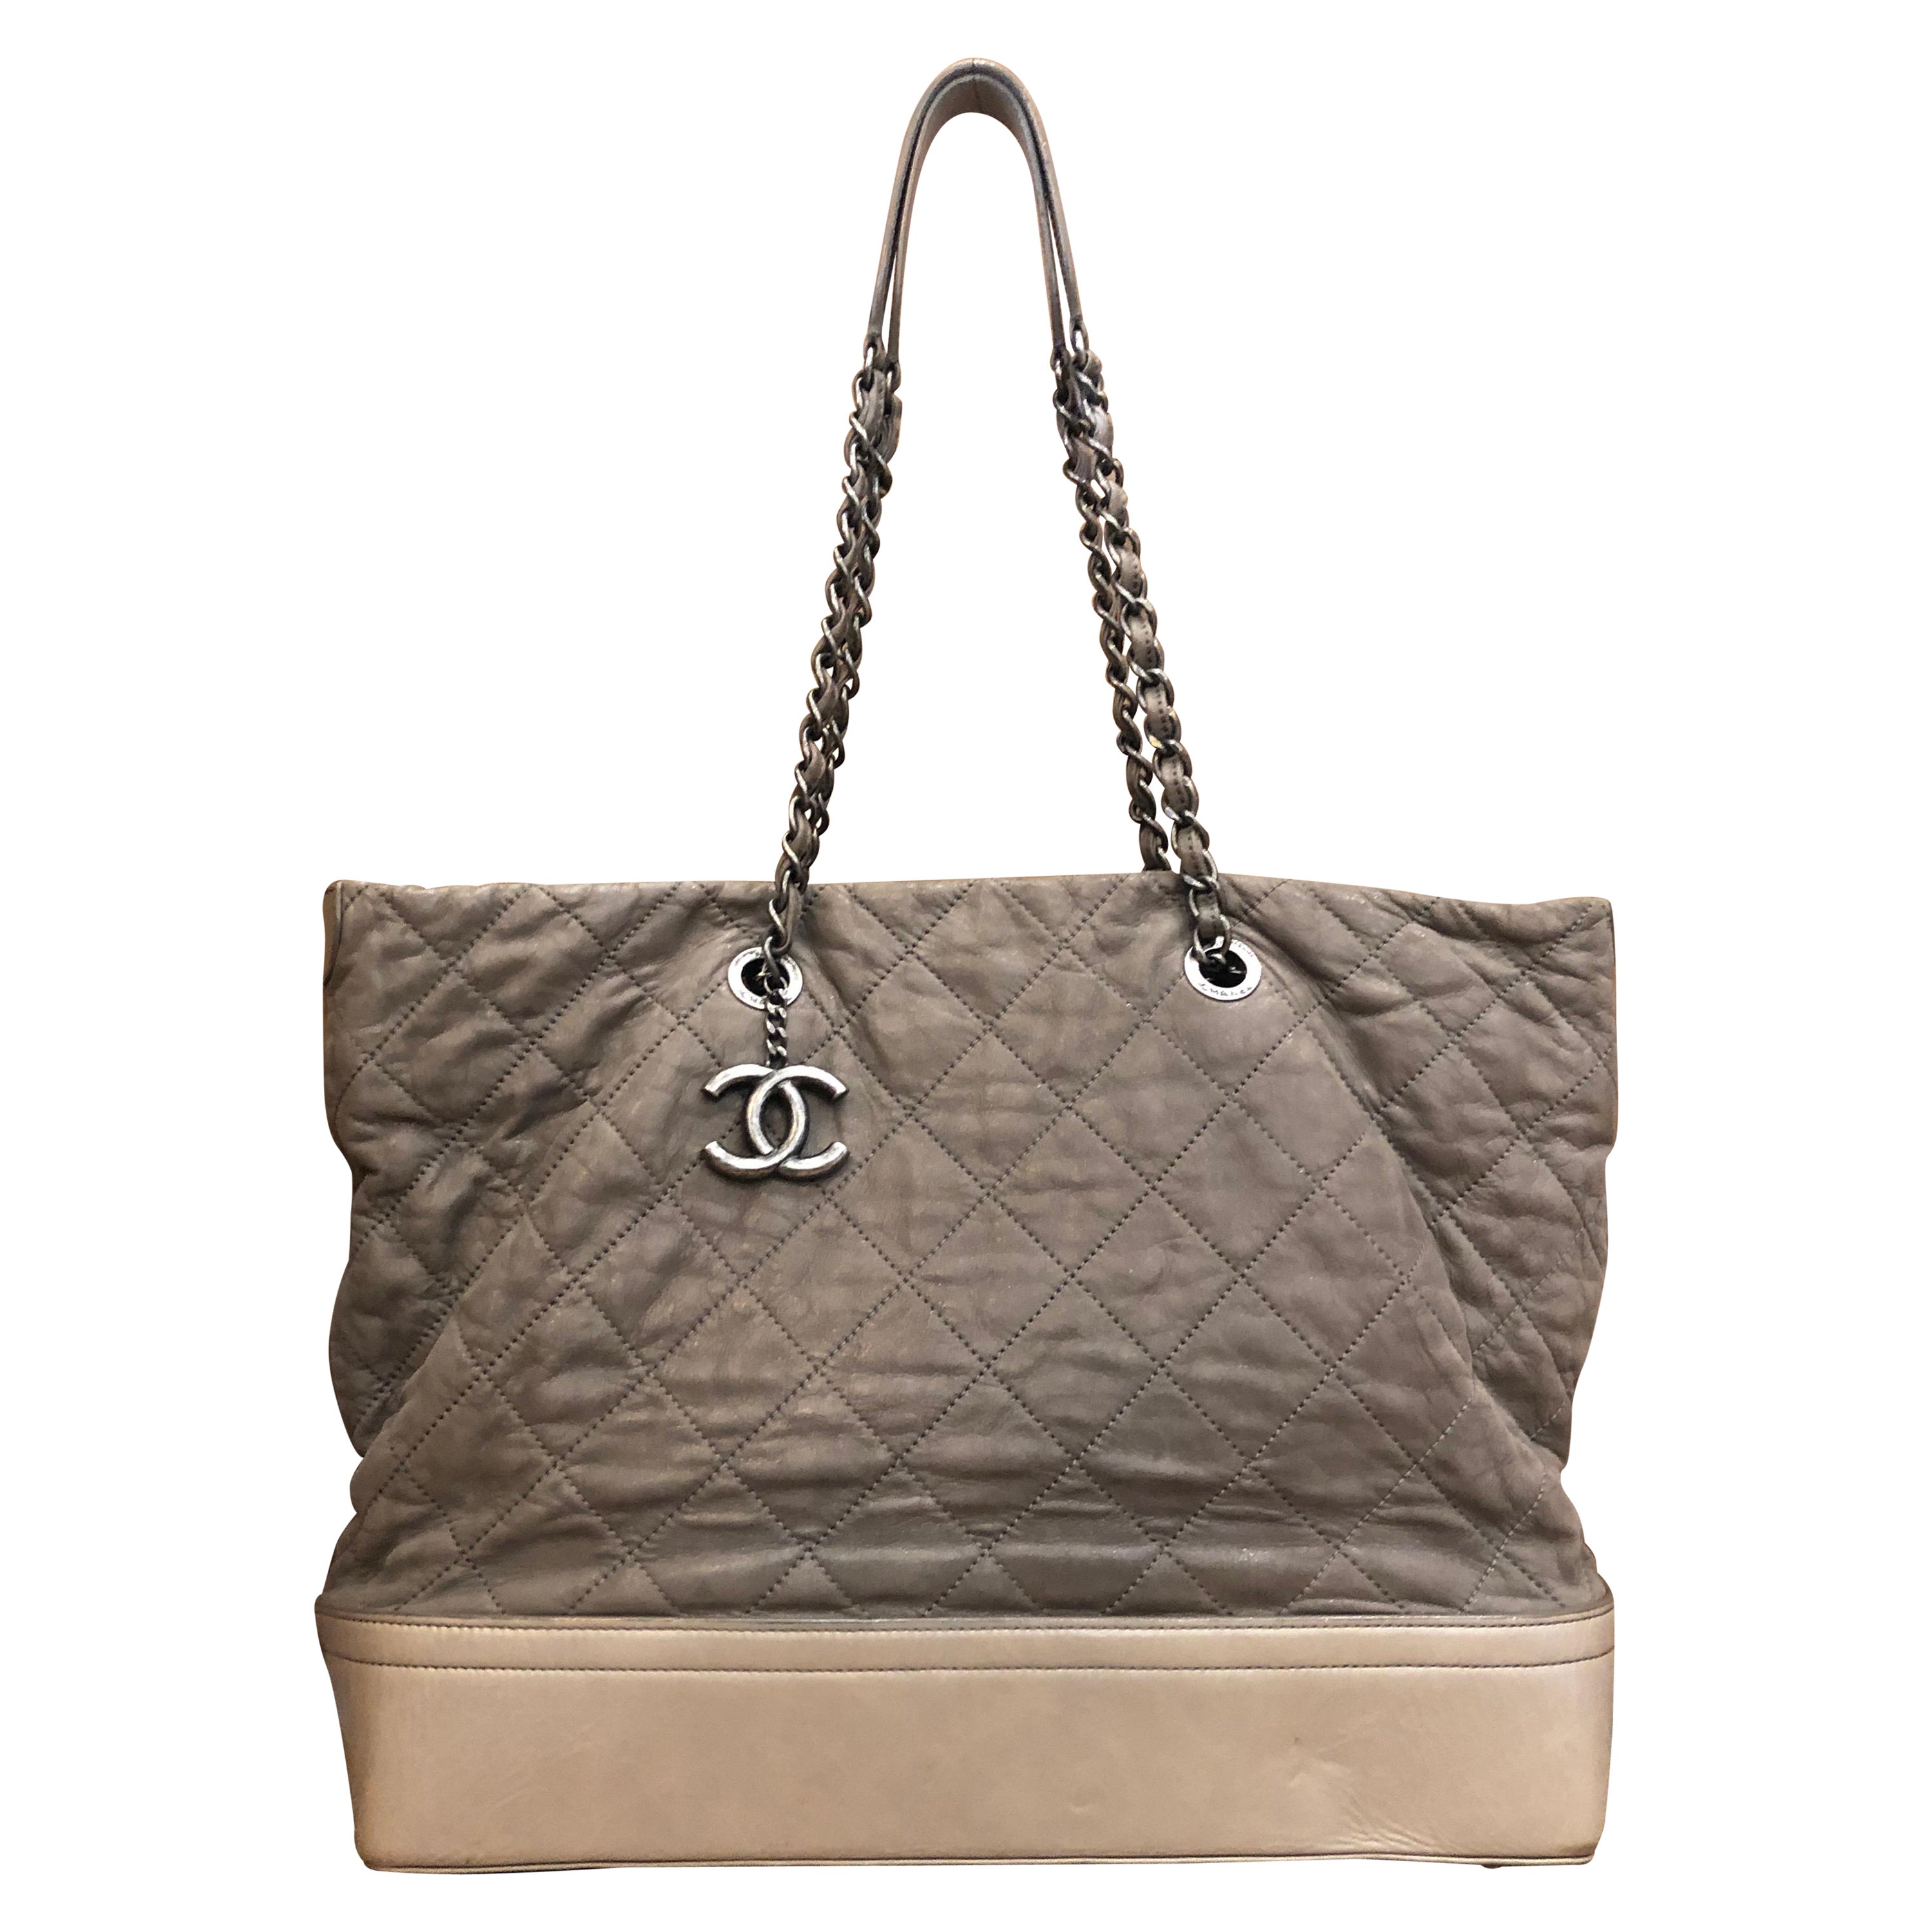 Gorgeous Chanel Tote Bag in grey rabbit fur and blue alcantara at